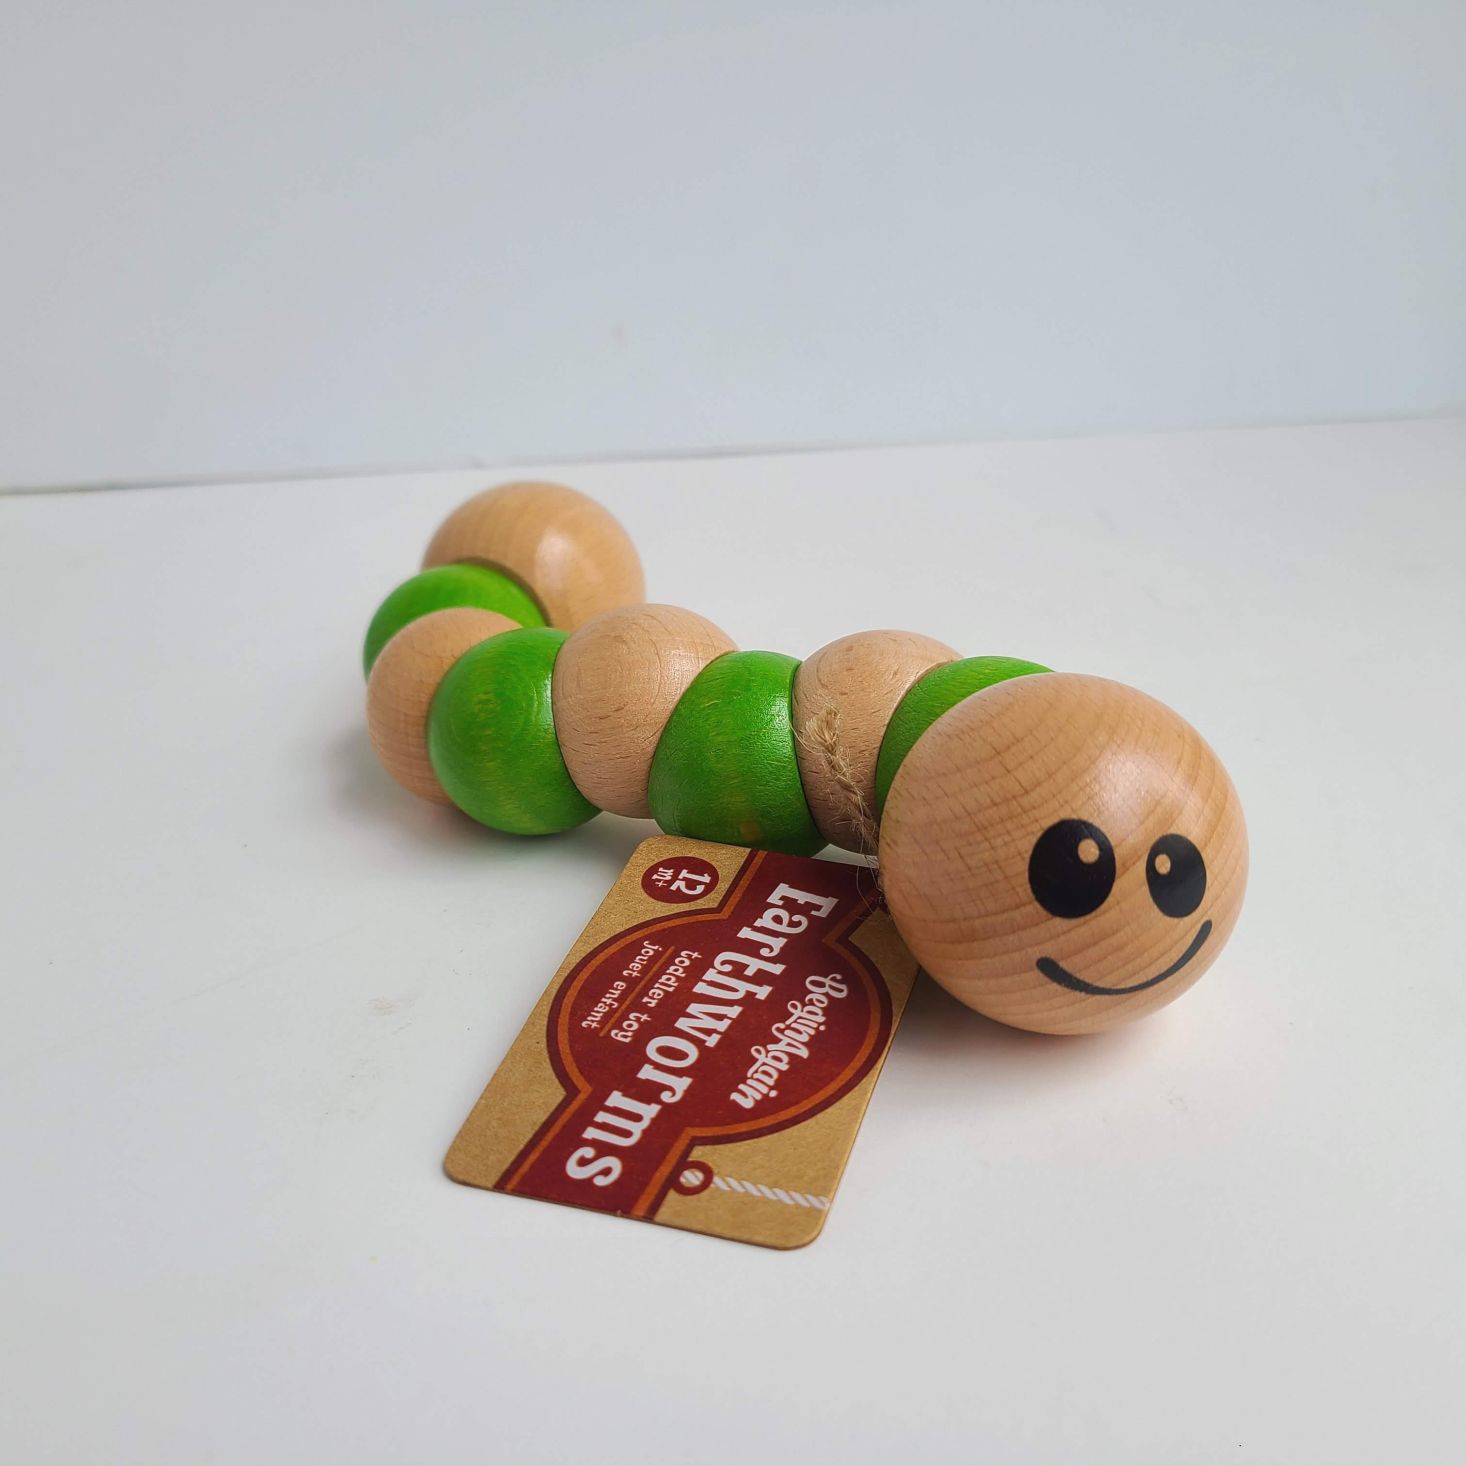 Ecocentric Moms Box October 2020 caterpillar toy